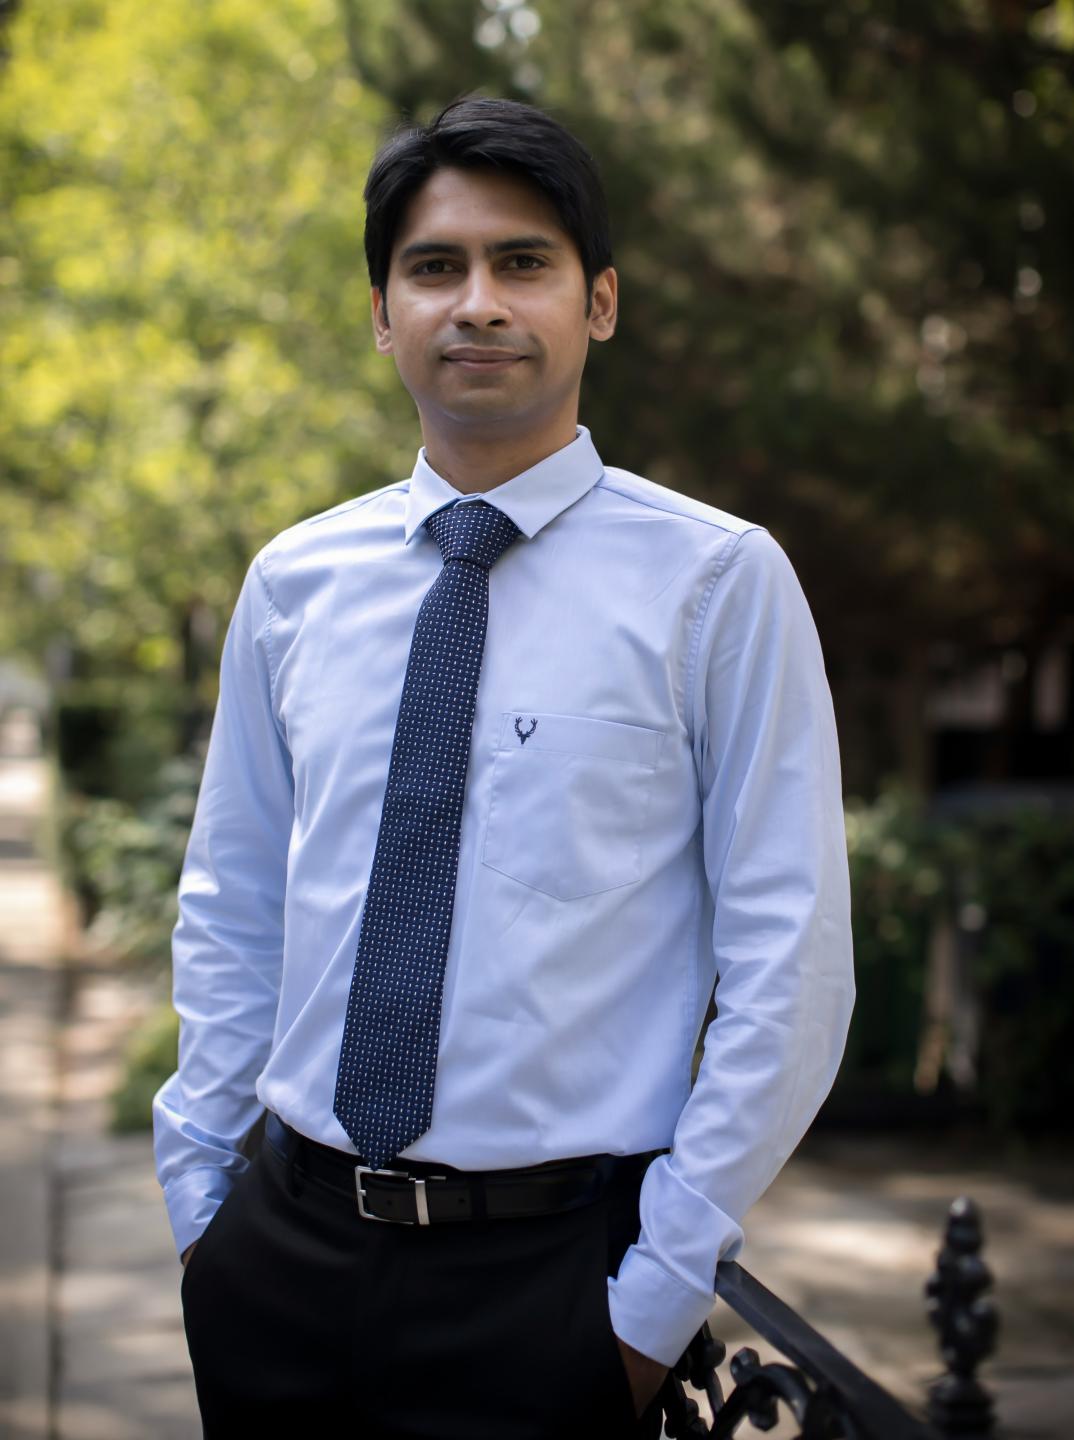 Assistant Professor Rakesh Sengupta